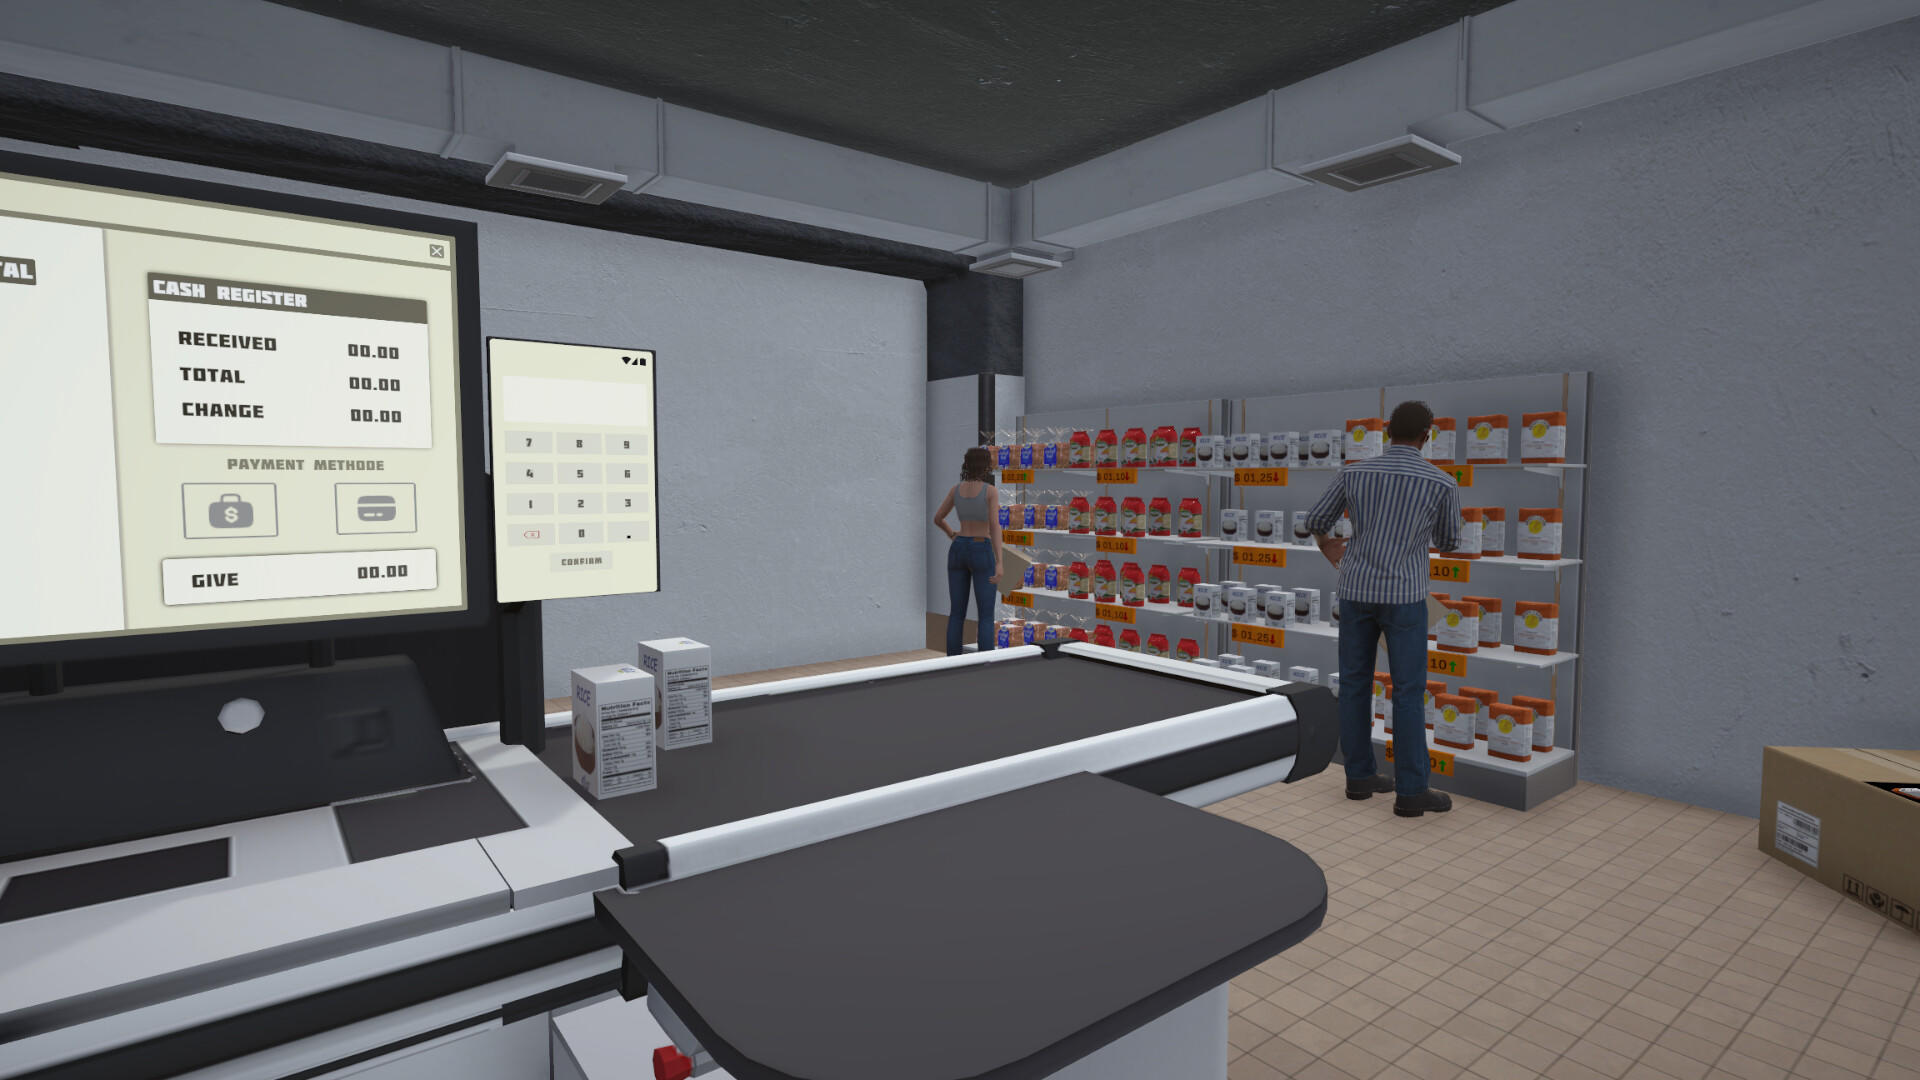 siMarket Supermarket Simulatorのキャプチャ